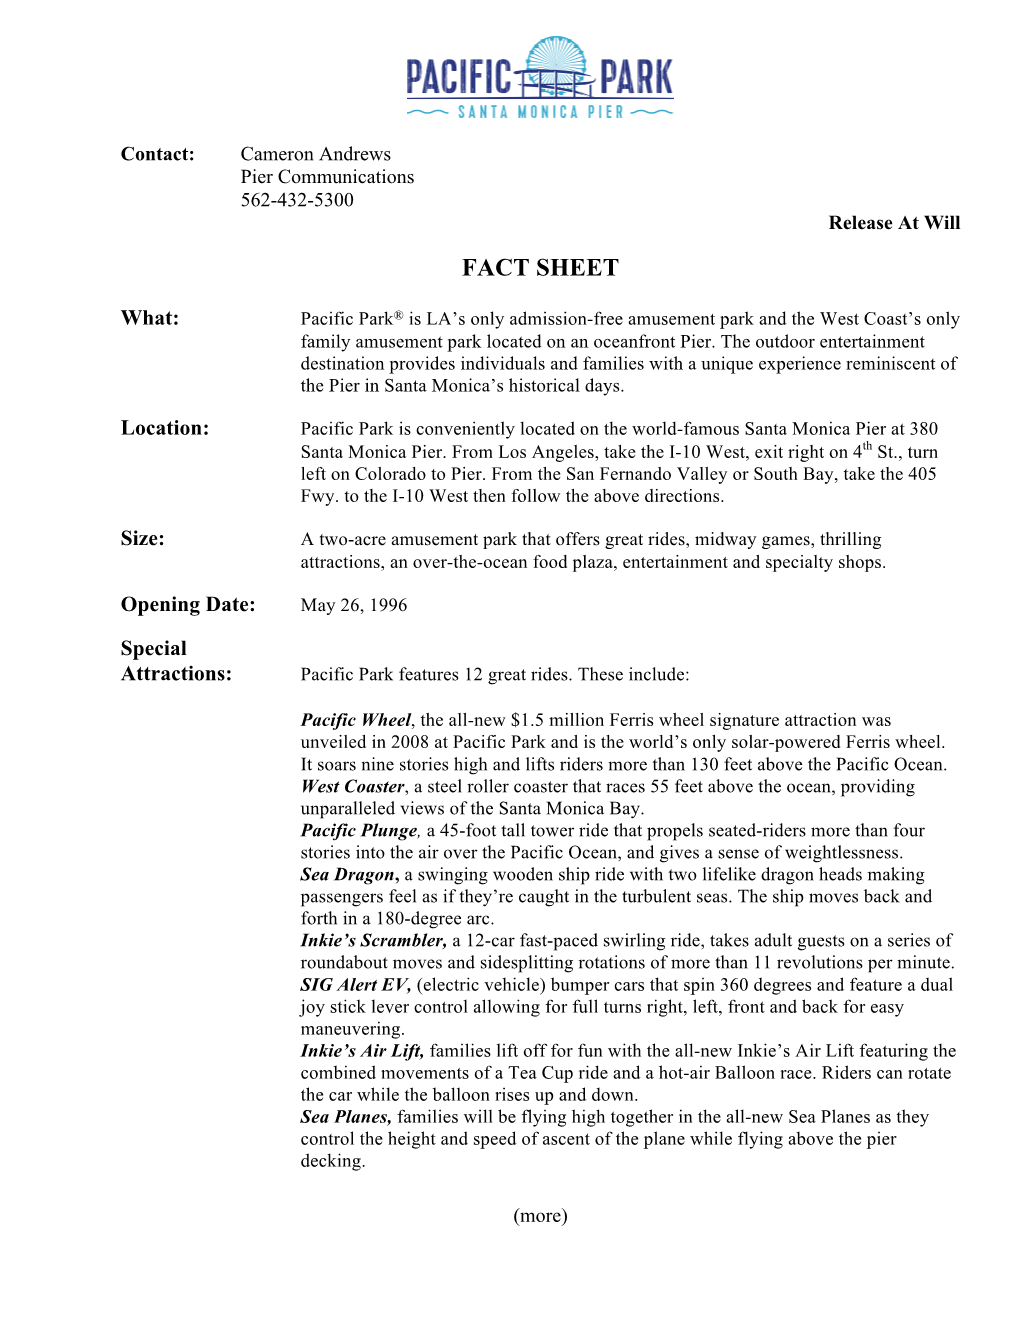 Pacific Park on the Santa Monica Pier Fact Sheet Release